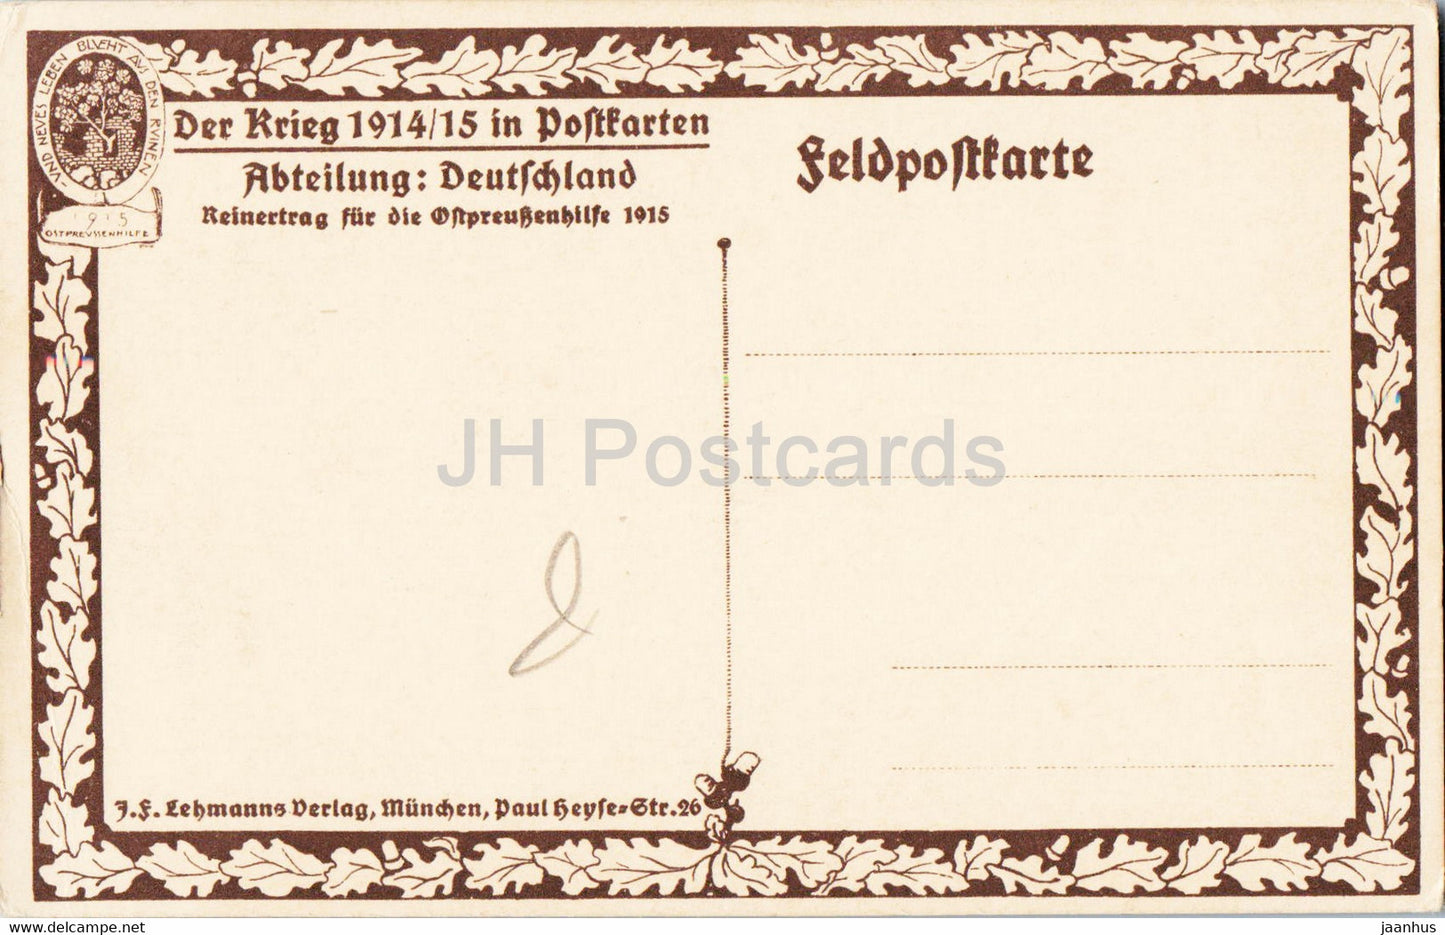 Molsheim i Elsass - Der Krieg 1914/15 in Postkarten - Feldpostkarte - old postcard - France - unused